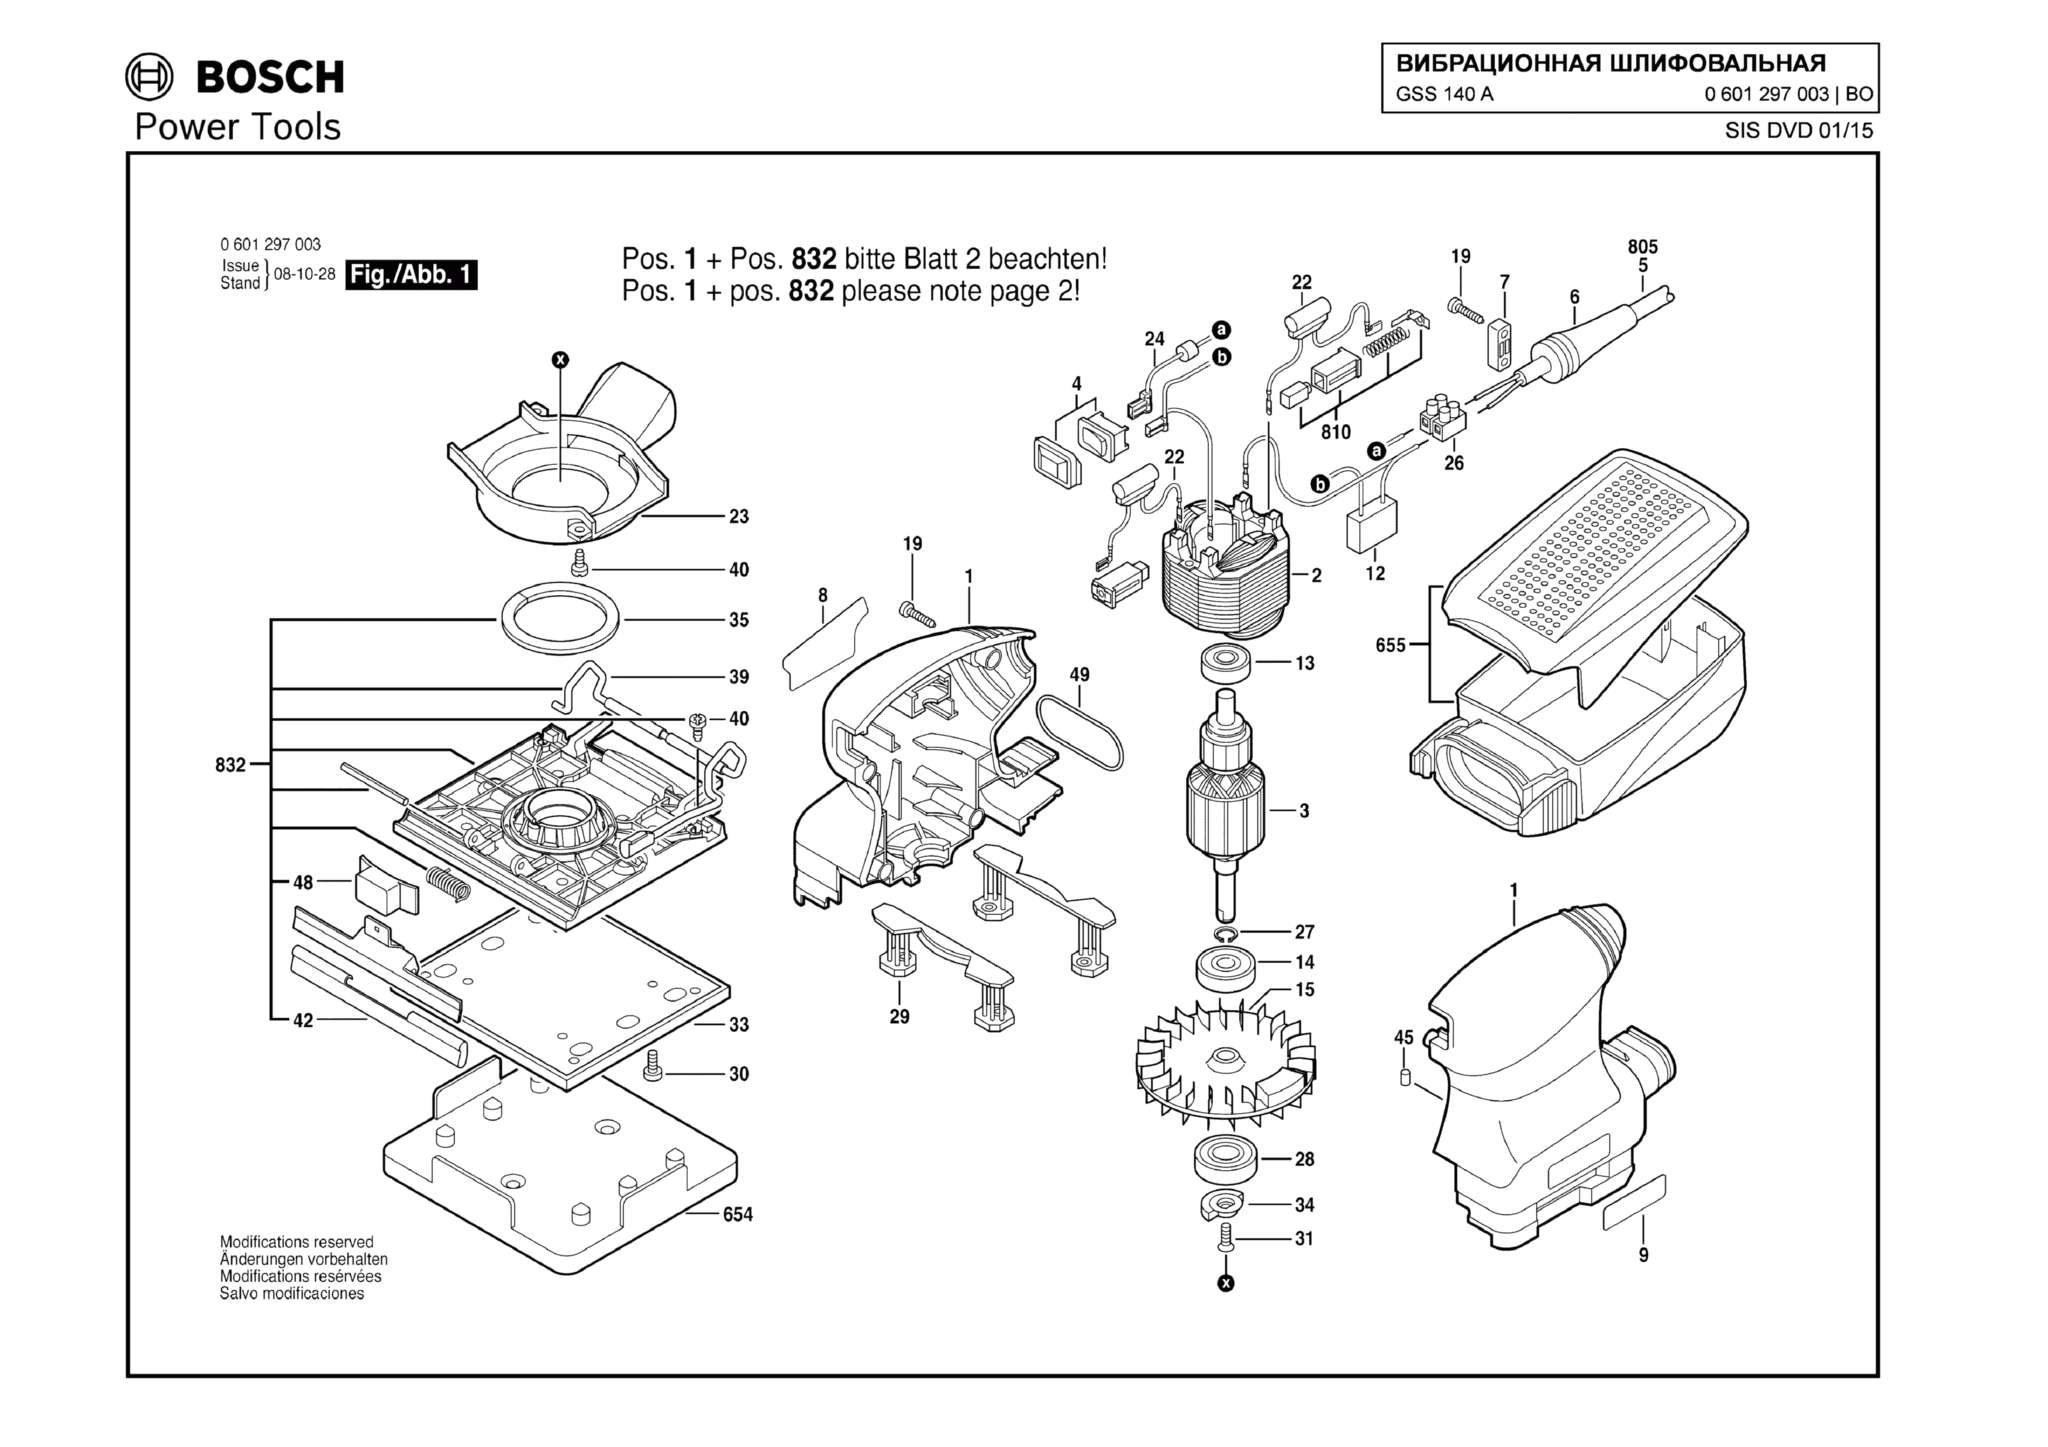 Запчасти, схема и деталировка Bosch GSS 140 A (ТИП 0601297003)